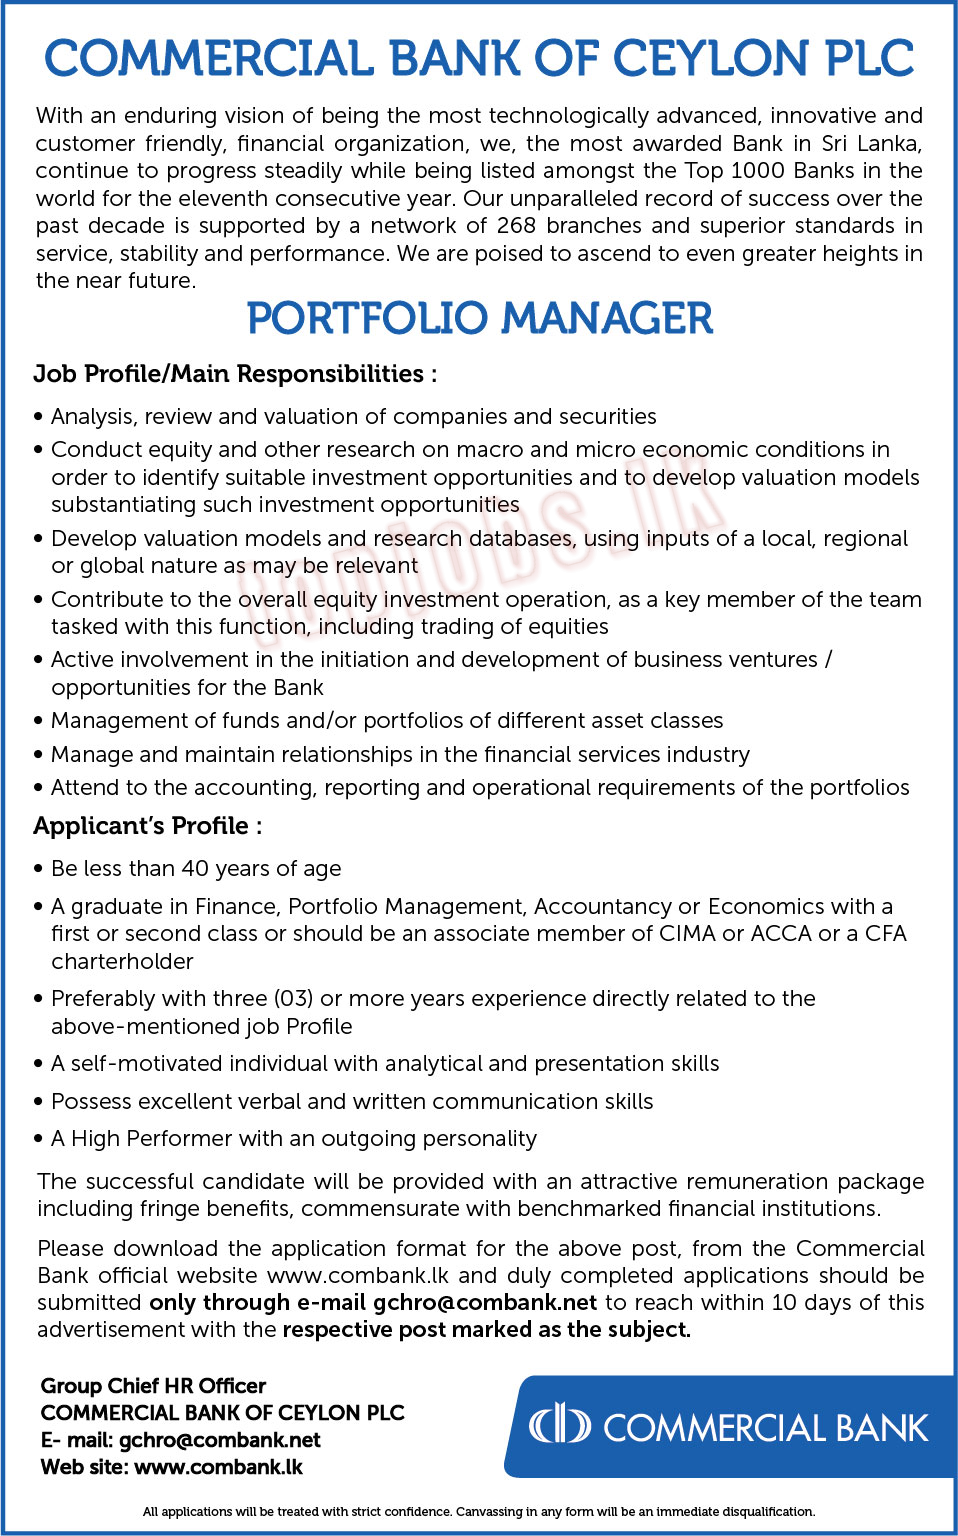 Portfolio Manager Vacancy in Commercial Bank of Ceylon PLC